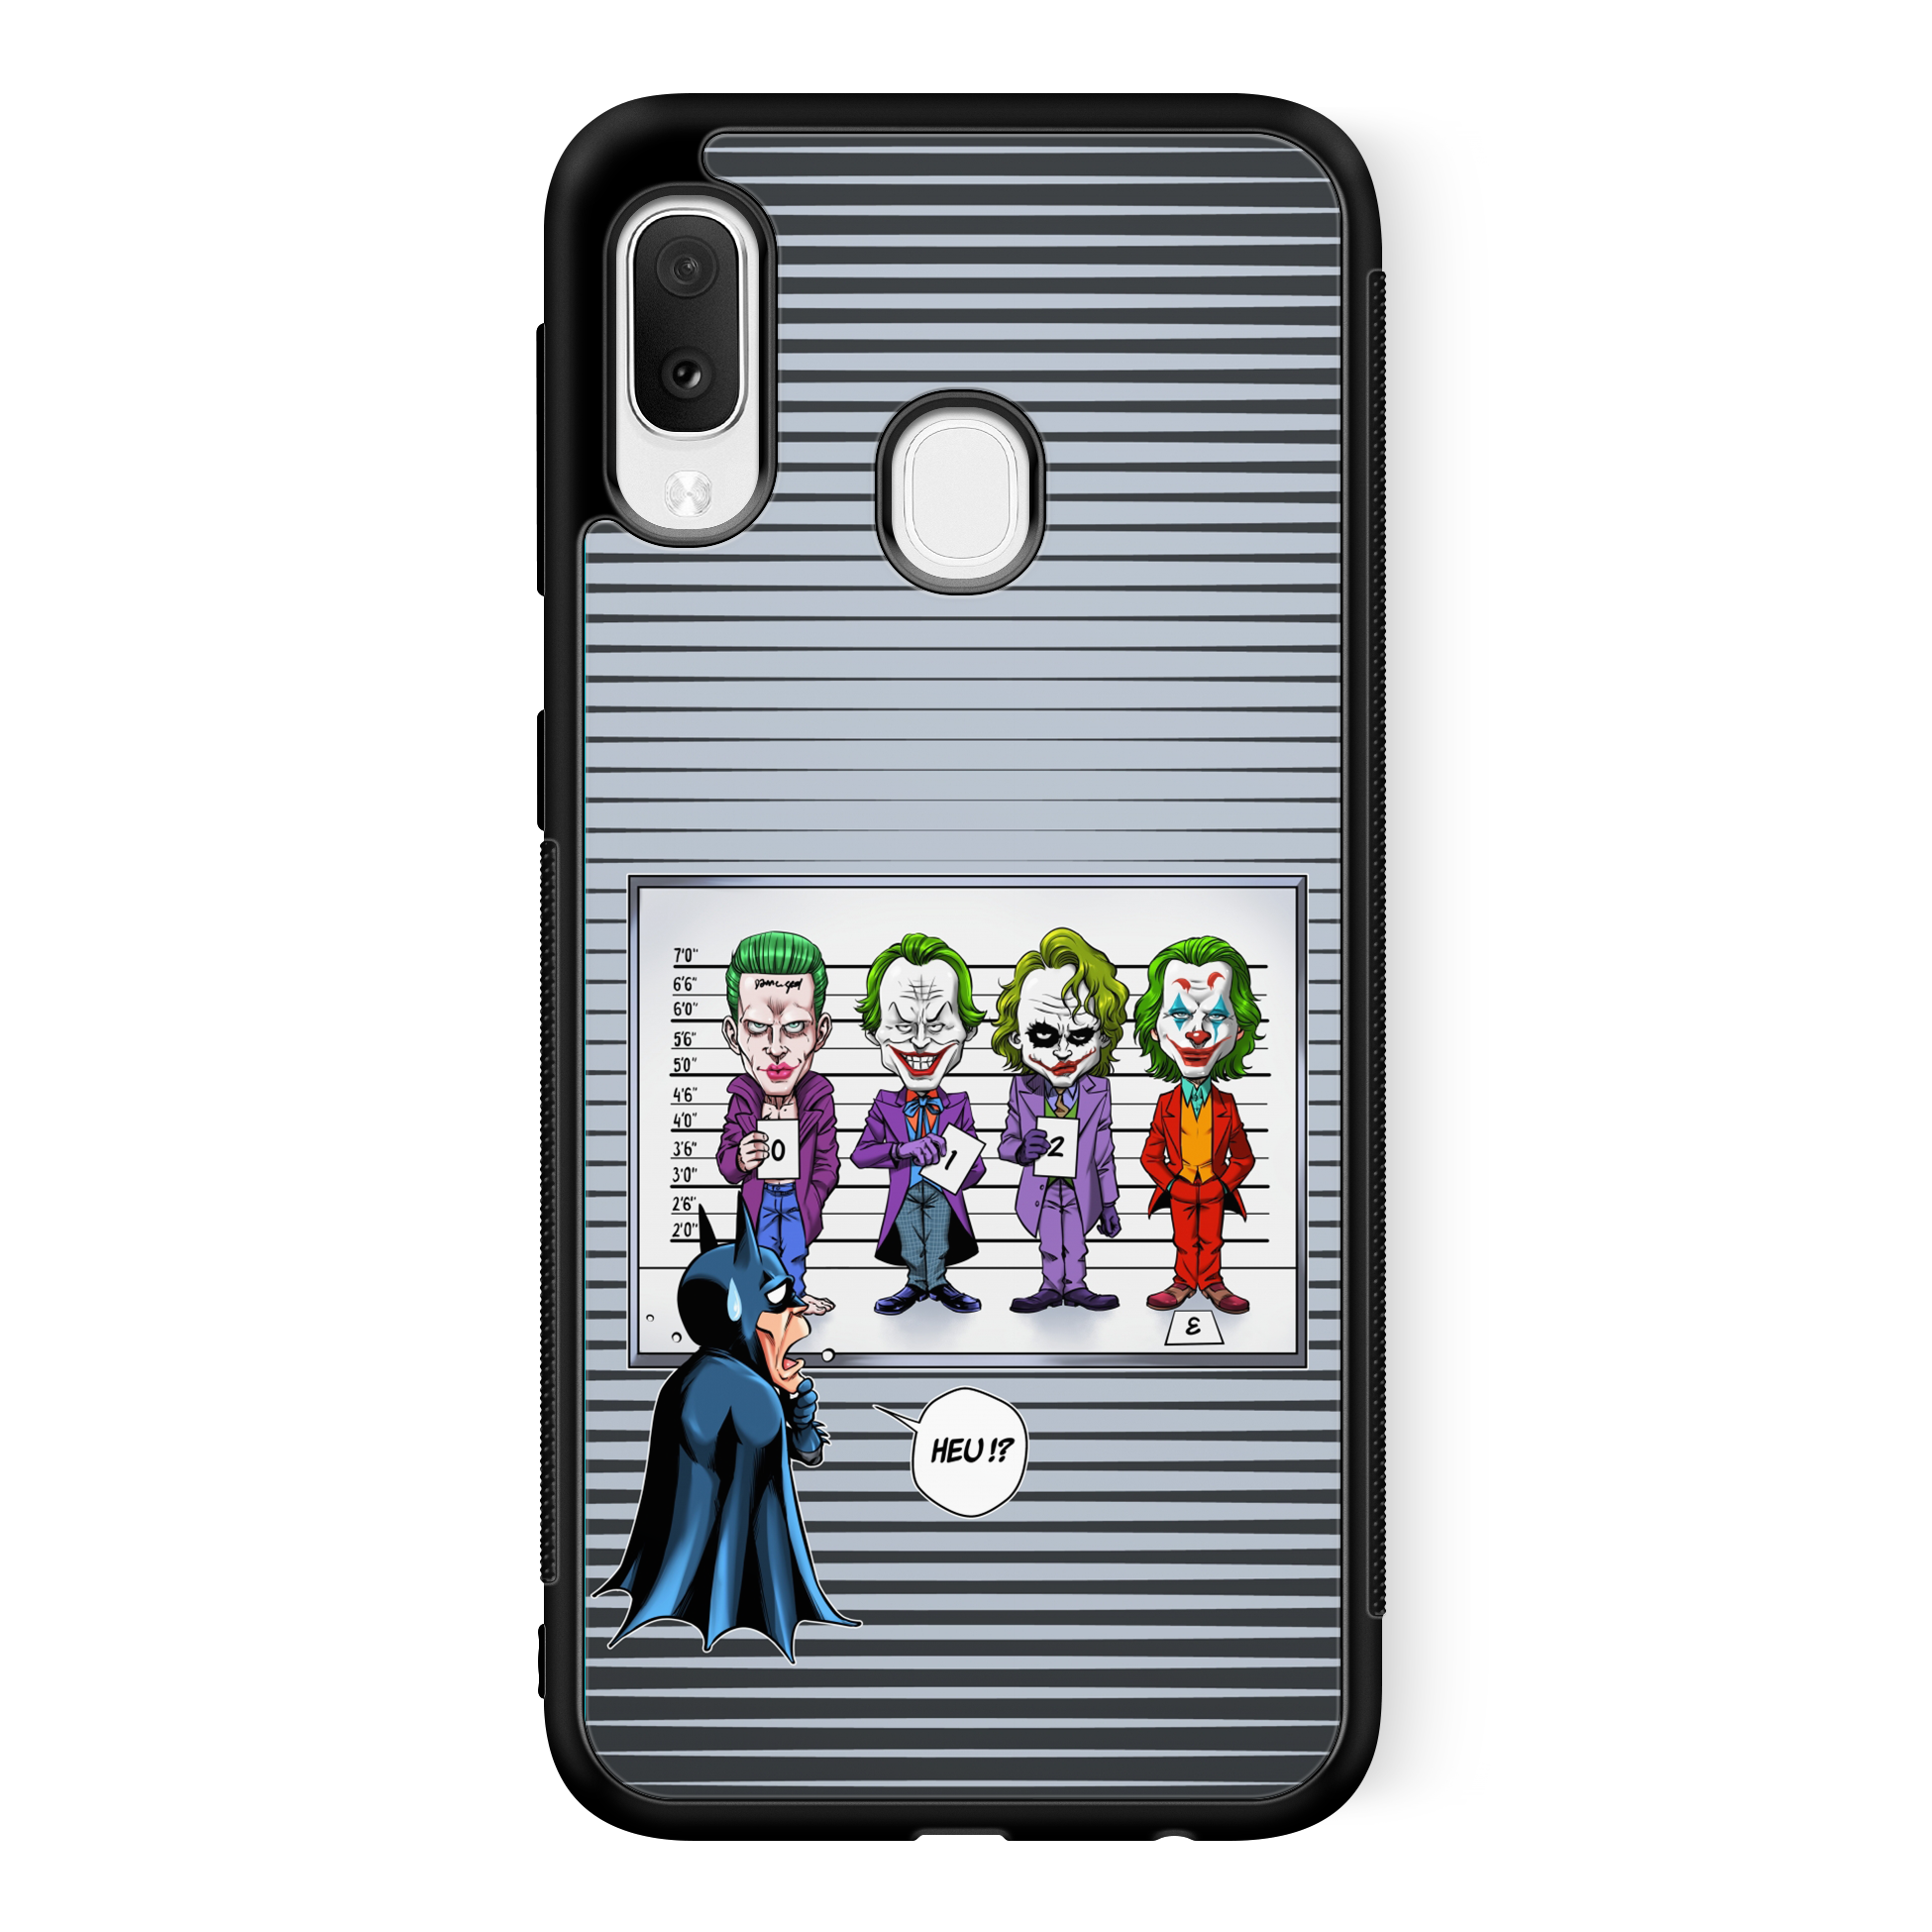 Samsung Galaxy A20e Smartphone Cover (Black Color) - Batman;Dark Night  parody - Batman, The Joker (Jared Letho, Jack Nicholson and Heath Ledger  und Joaquin Phoenix) - Batman and The Joker (Jared Letho,